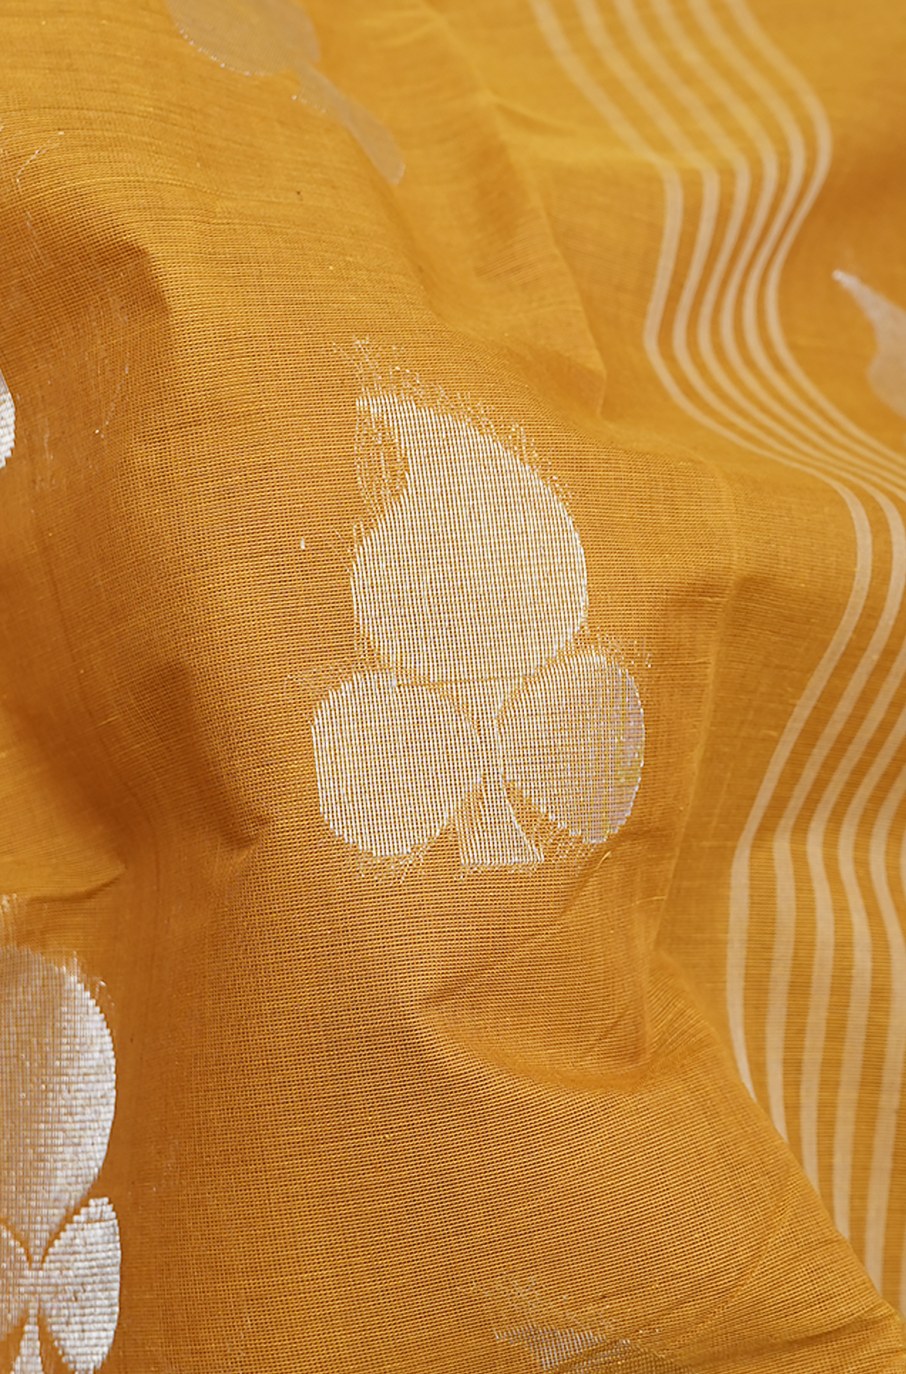 Leaf Zari Motifs Golden Yellow Coimbatore Cotton Saree